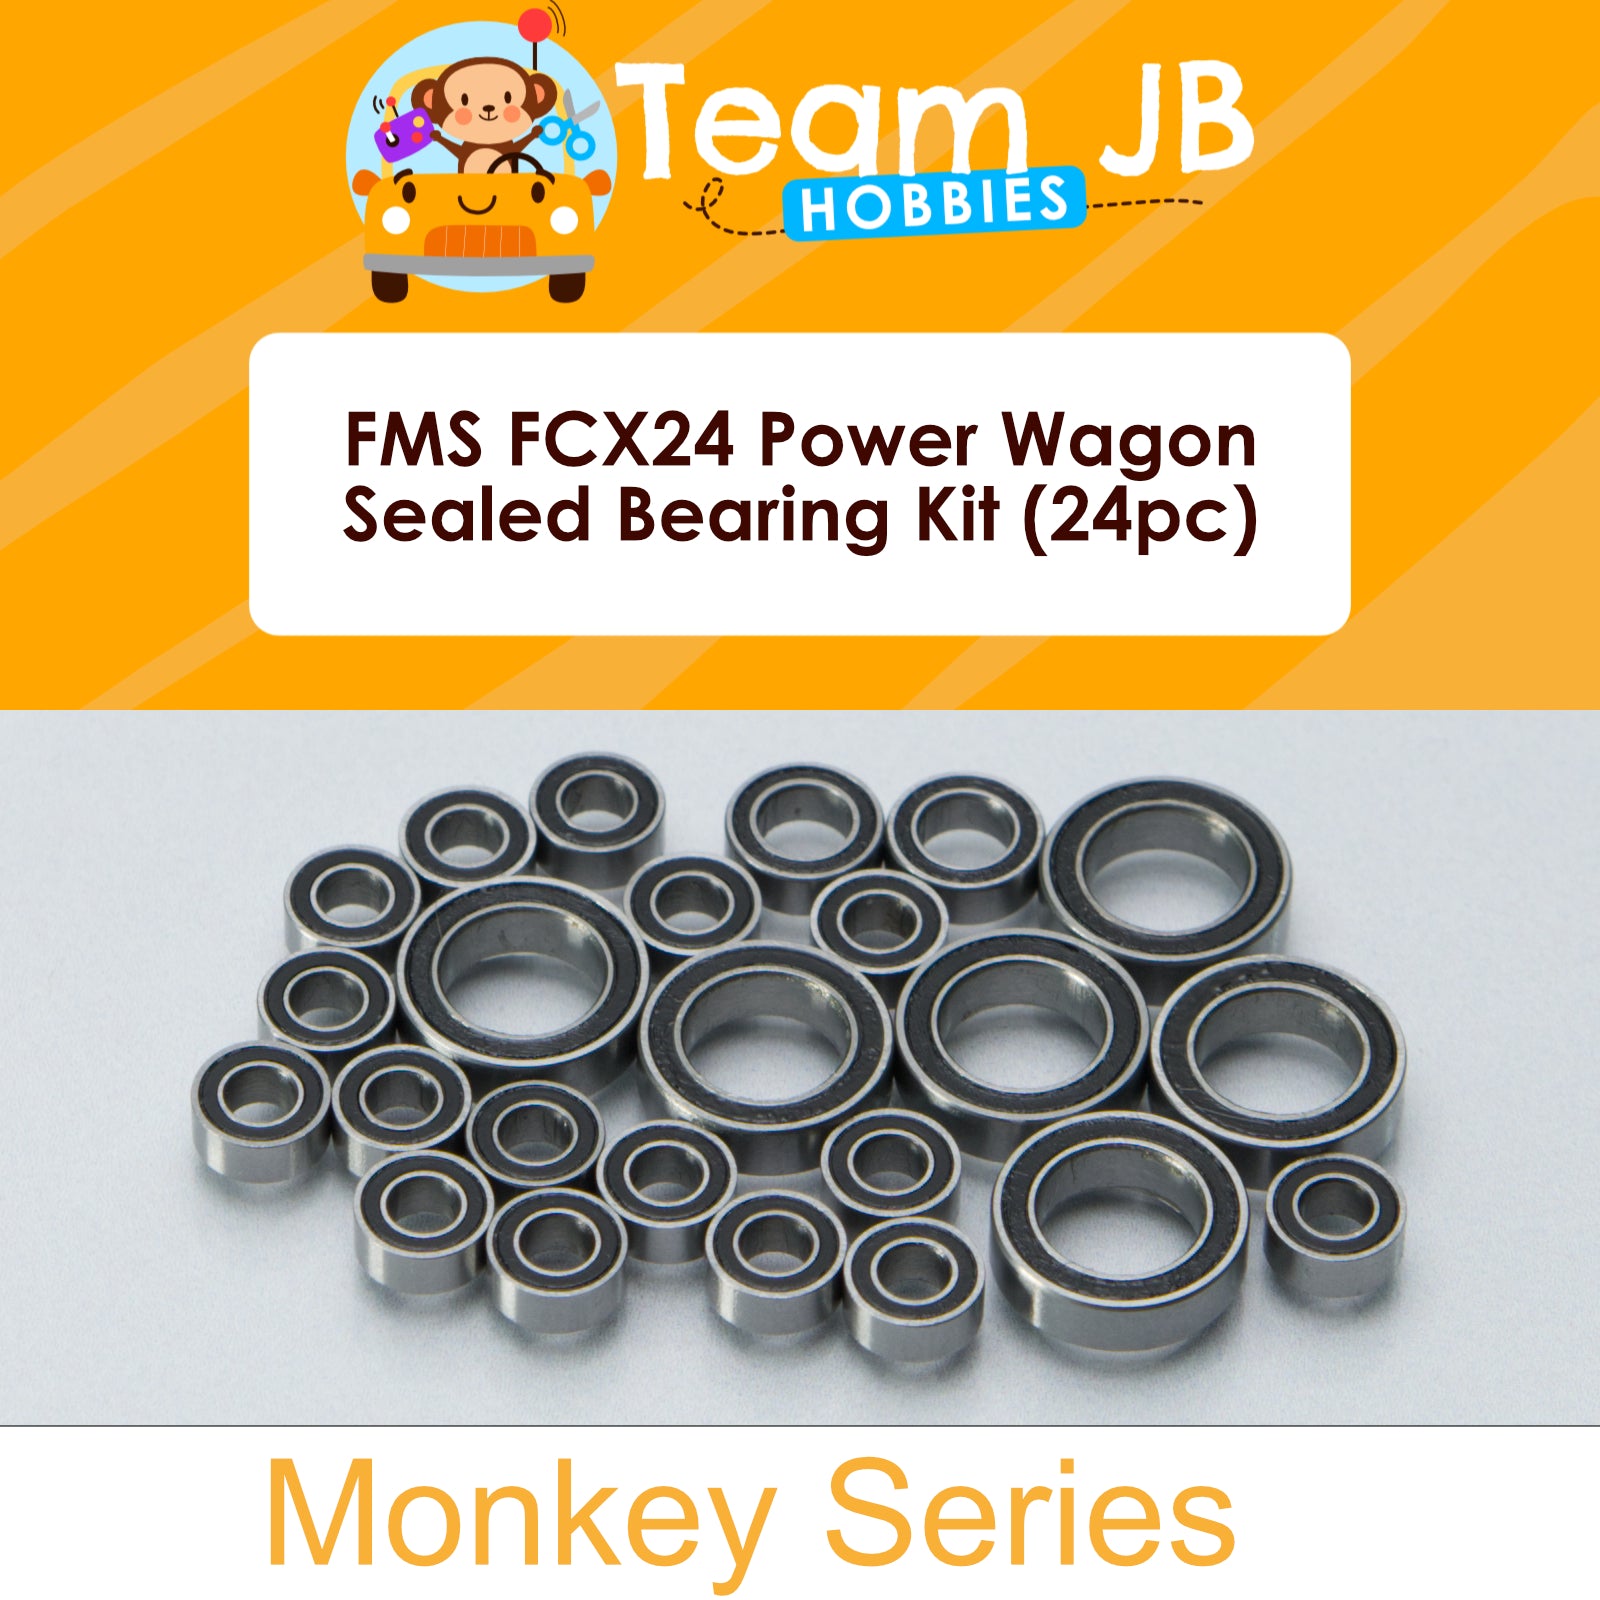 FMS FCX24 Power Wagon - Sealed Bearing Kit